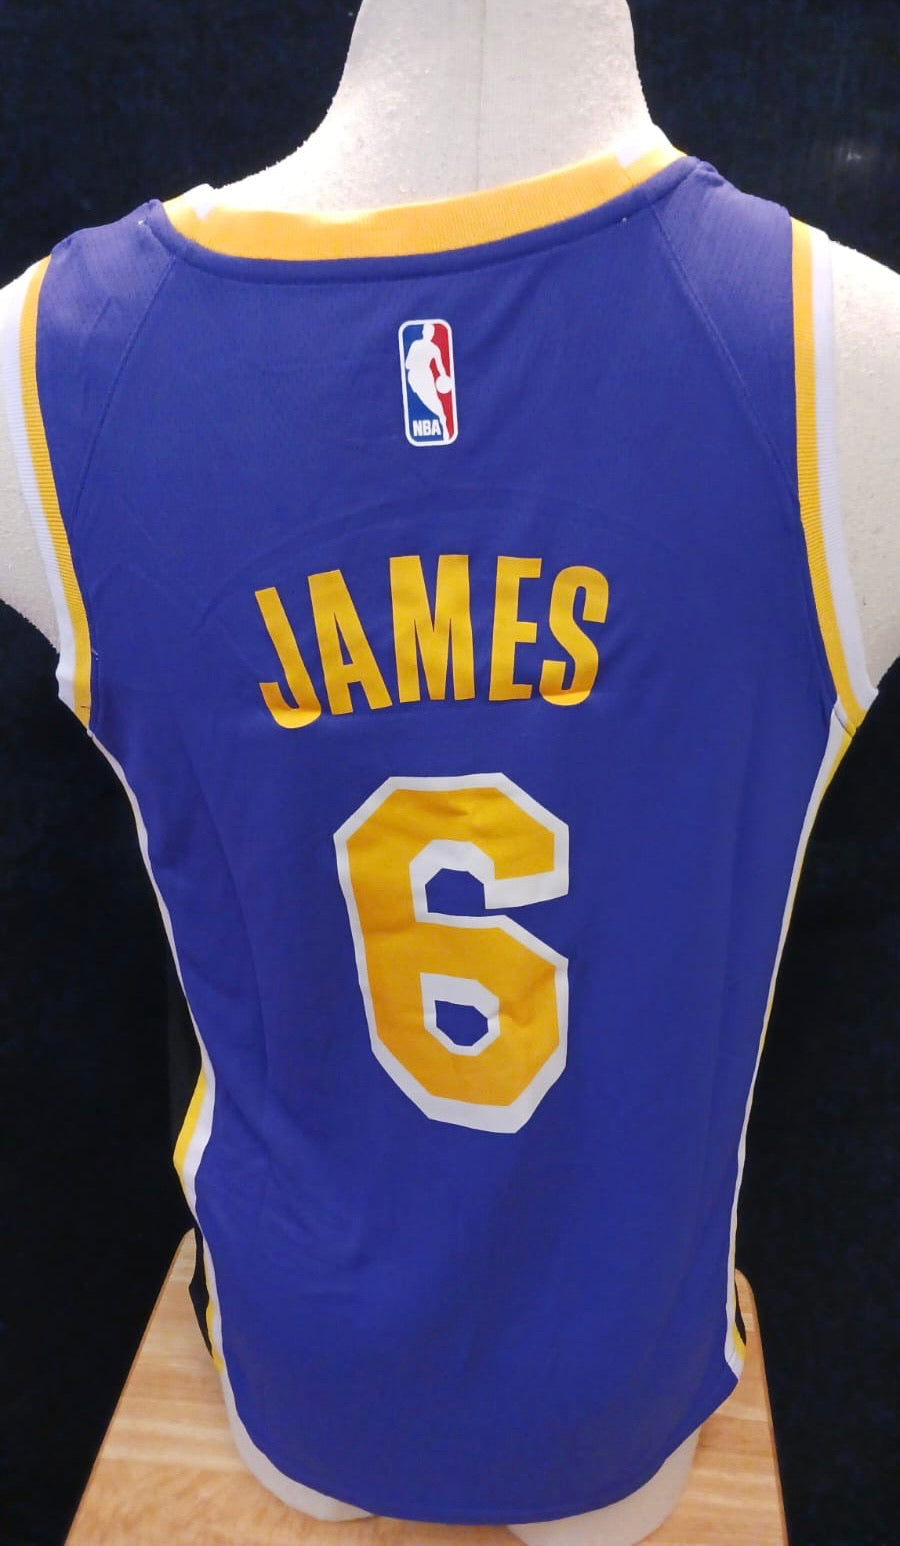 NBA Lebron James Lakers jersey